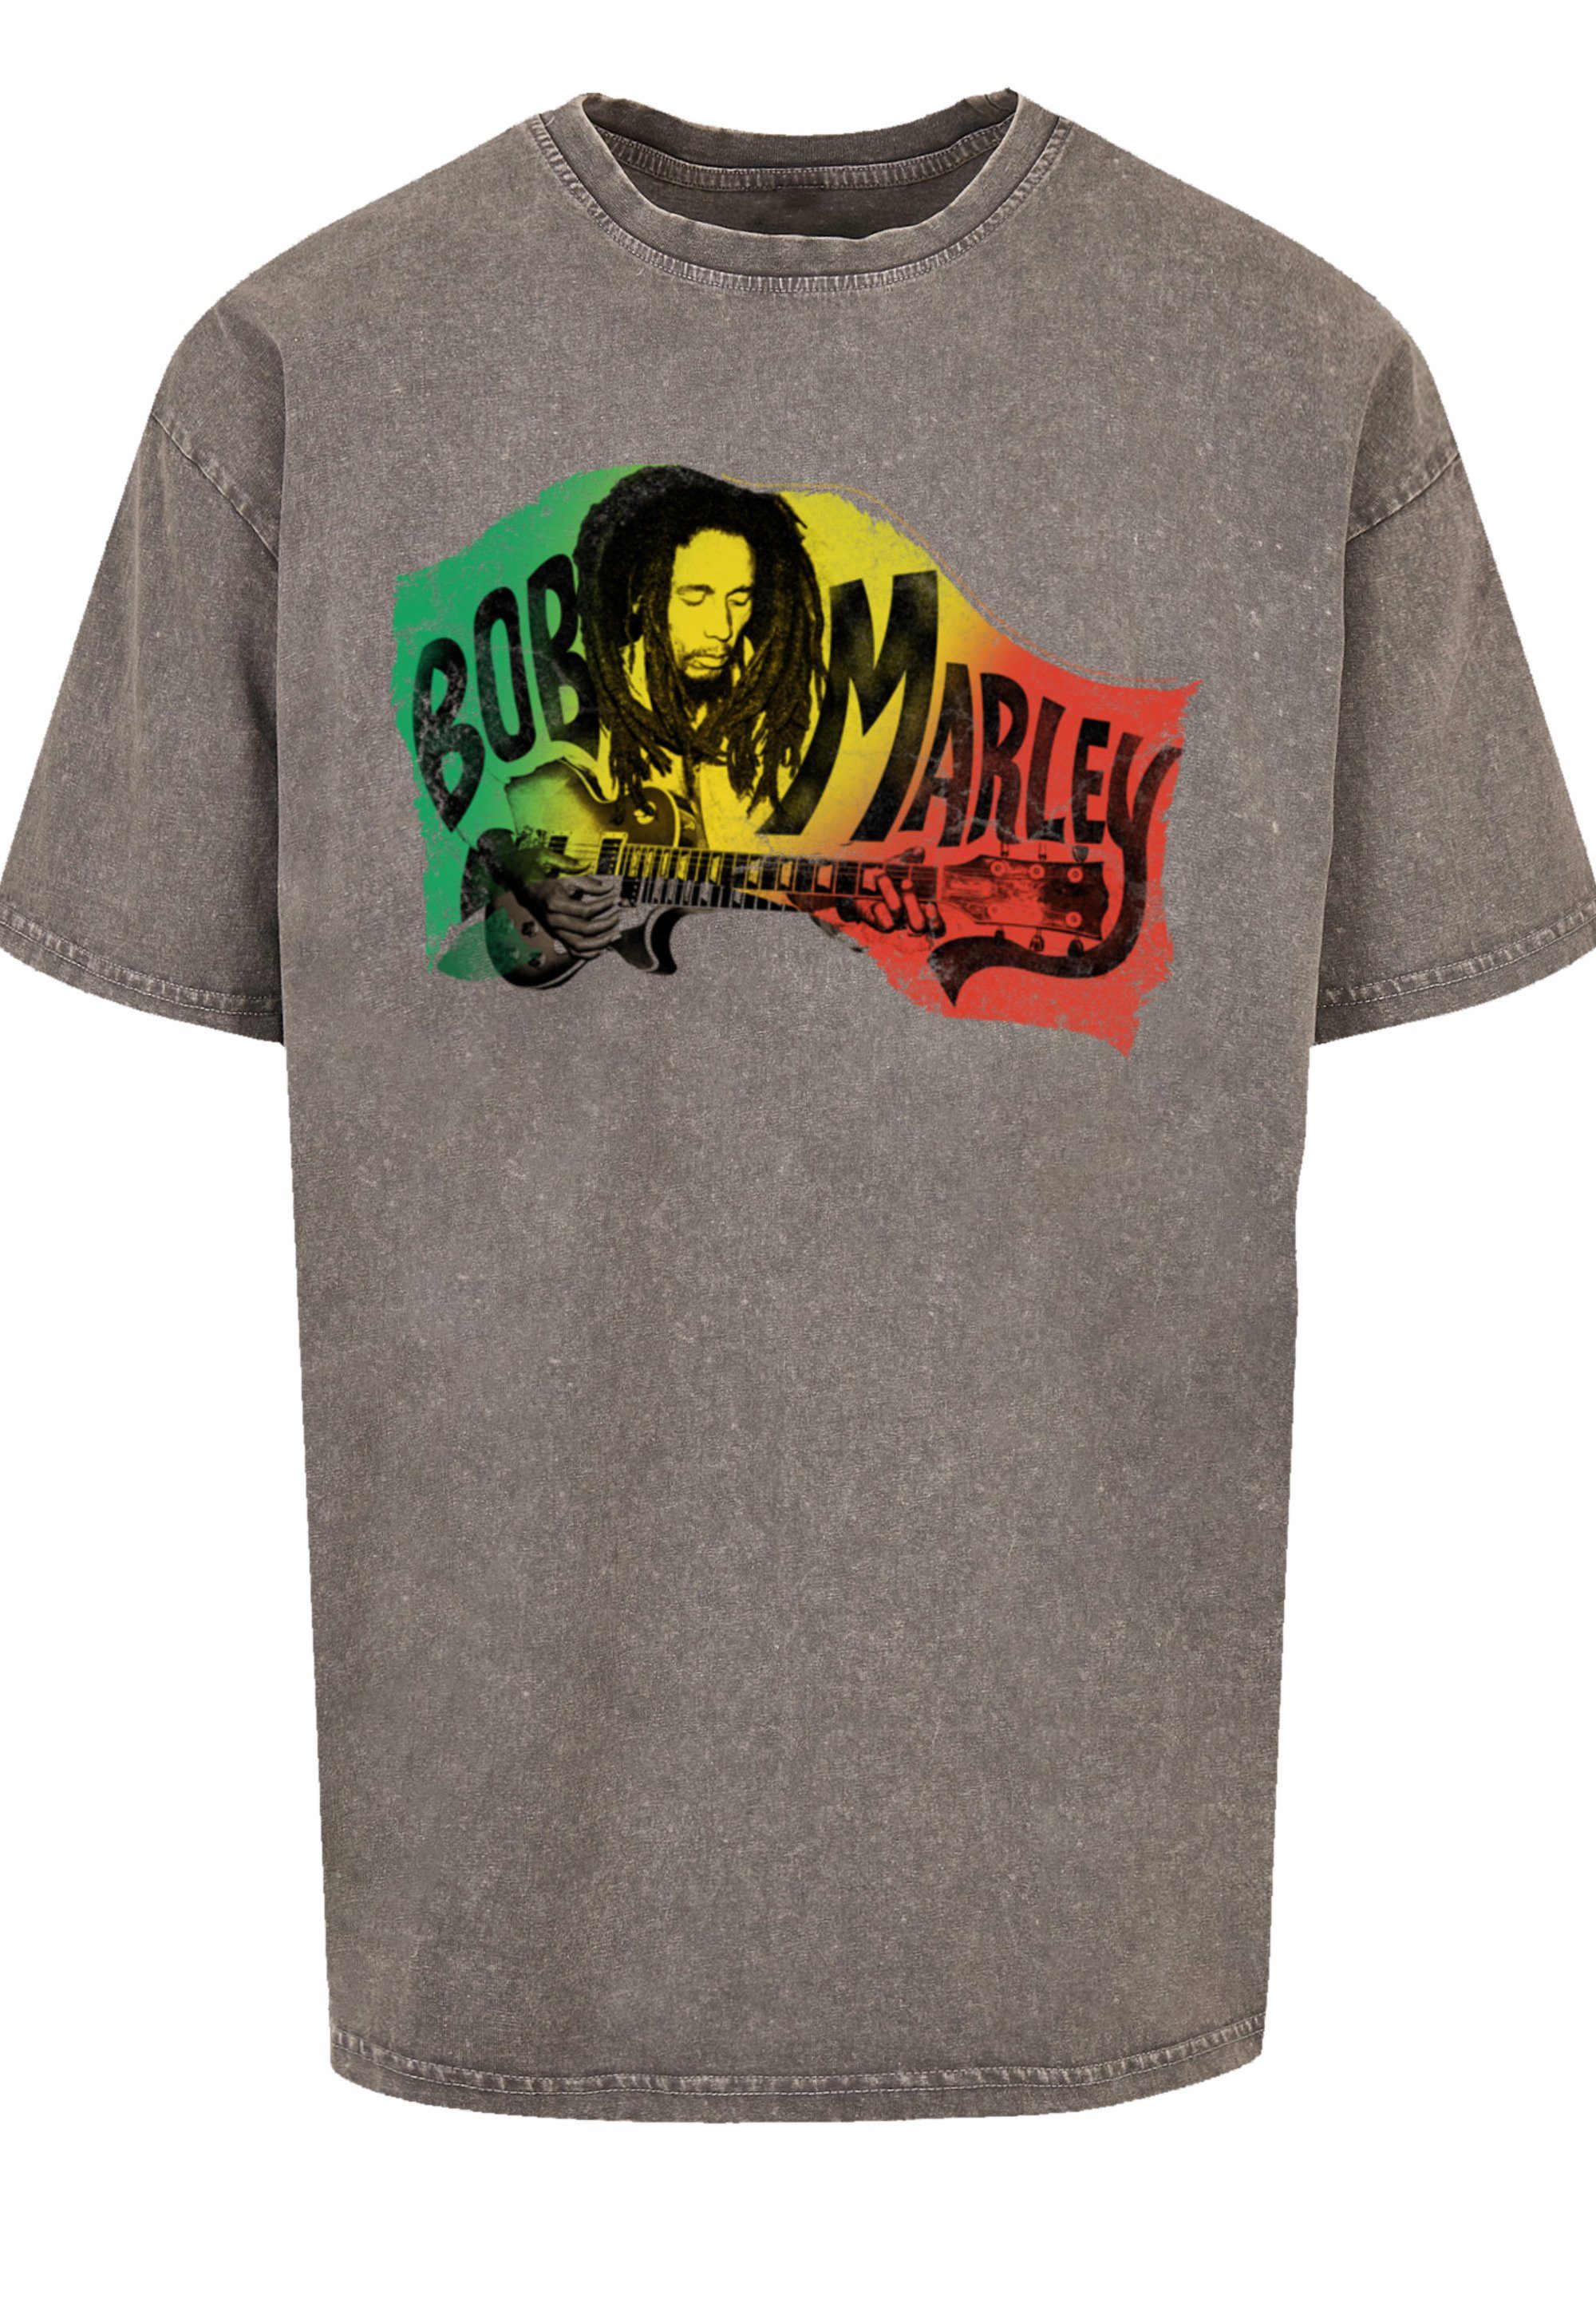 F4NT4STIC T-Shirt Bob Marley Chords Musik, Off Reggae By Asphalt Rock Qualität, Music Premium